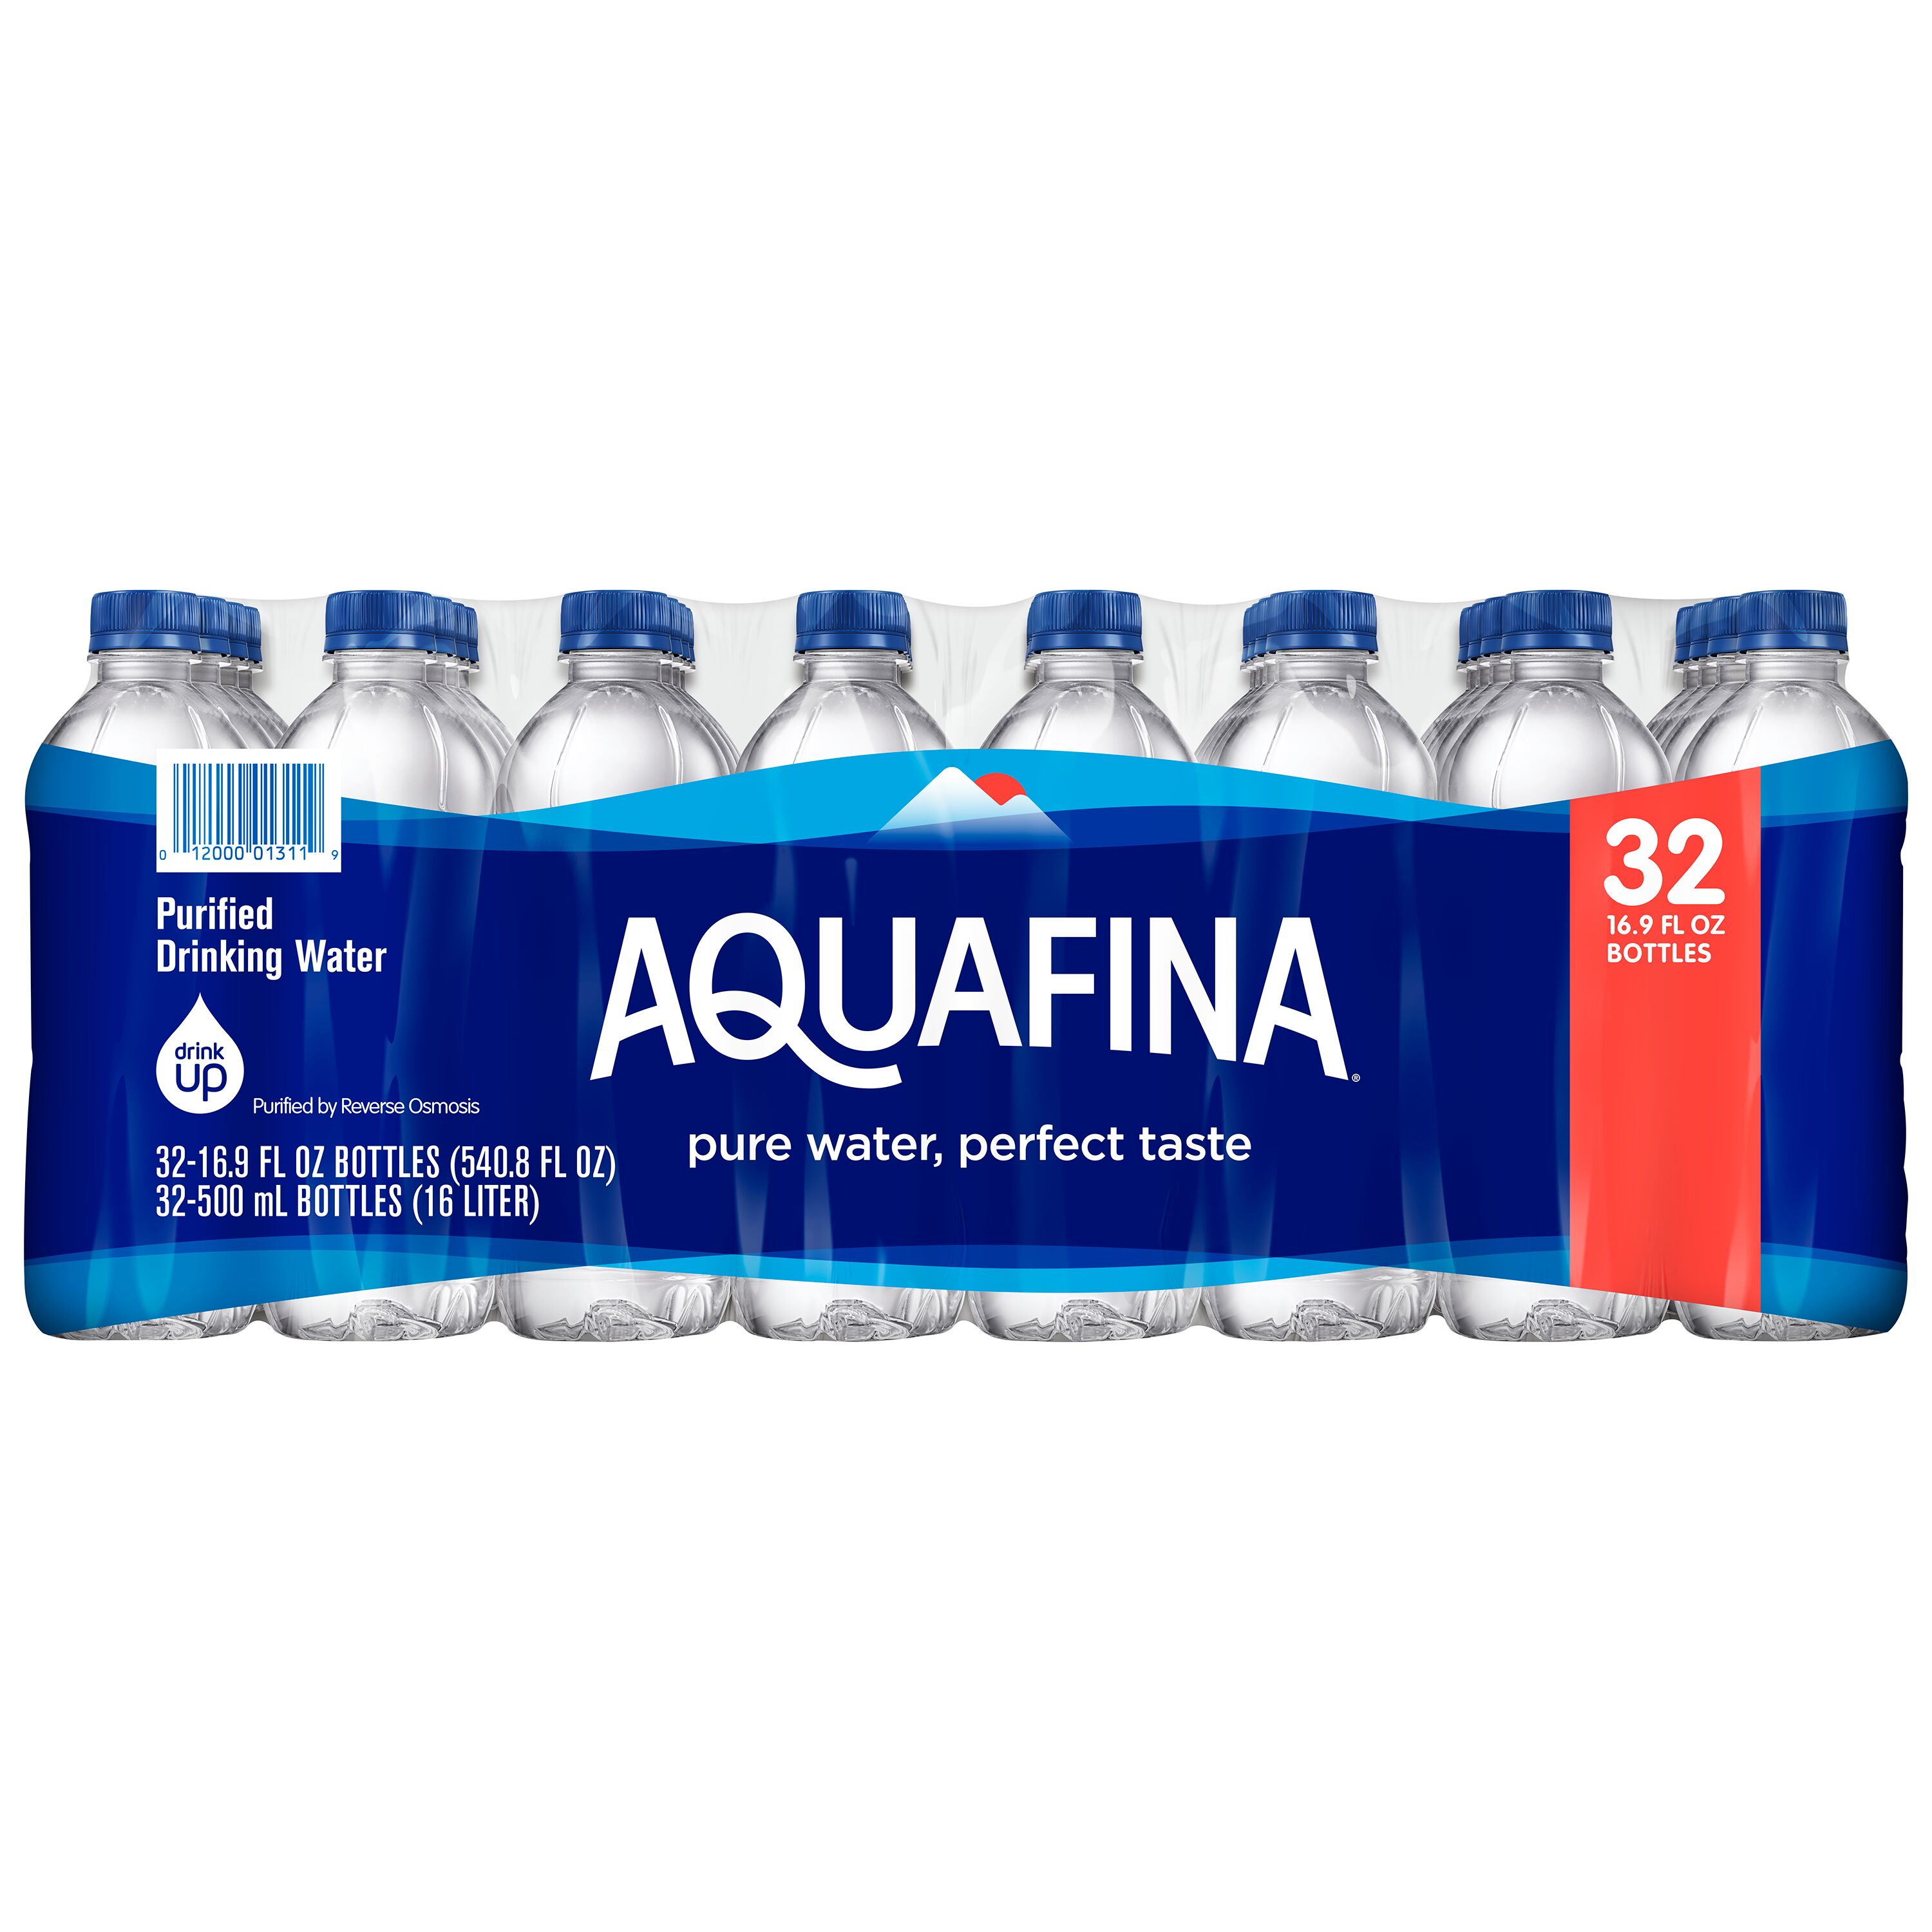 Aquafina Purified Bottled Drinking Water, 16.9 oz, 32 Pack Bottles - image 1 of 5